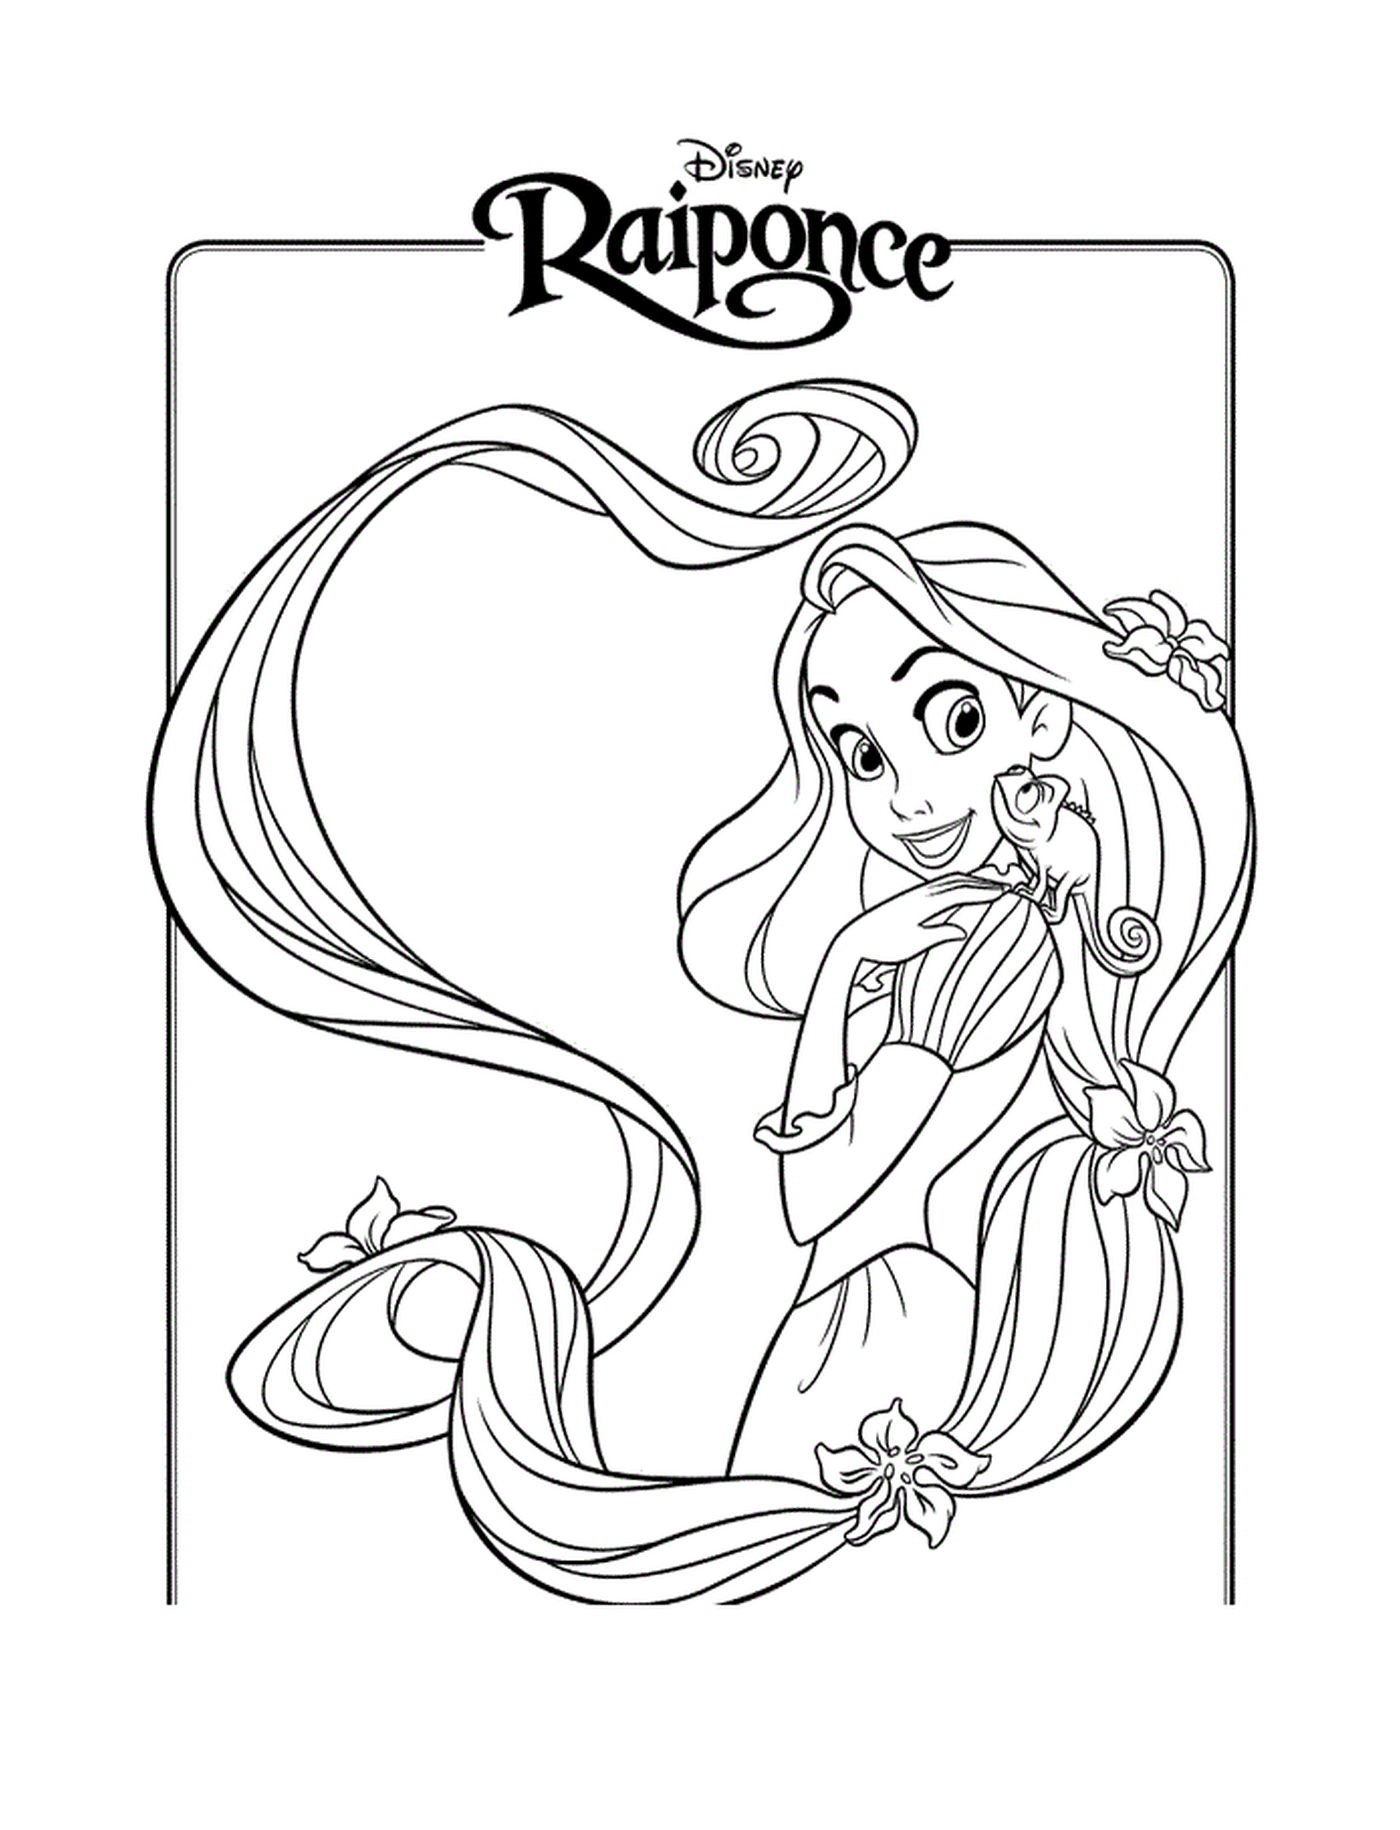  Raiponce Disney, 一个长头发的年轻女孩 